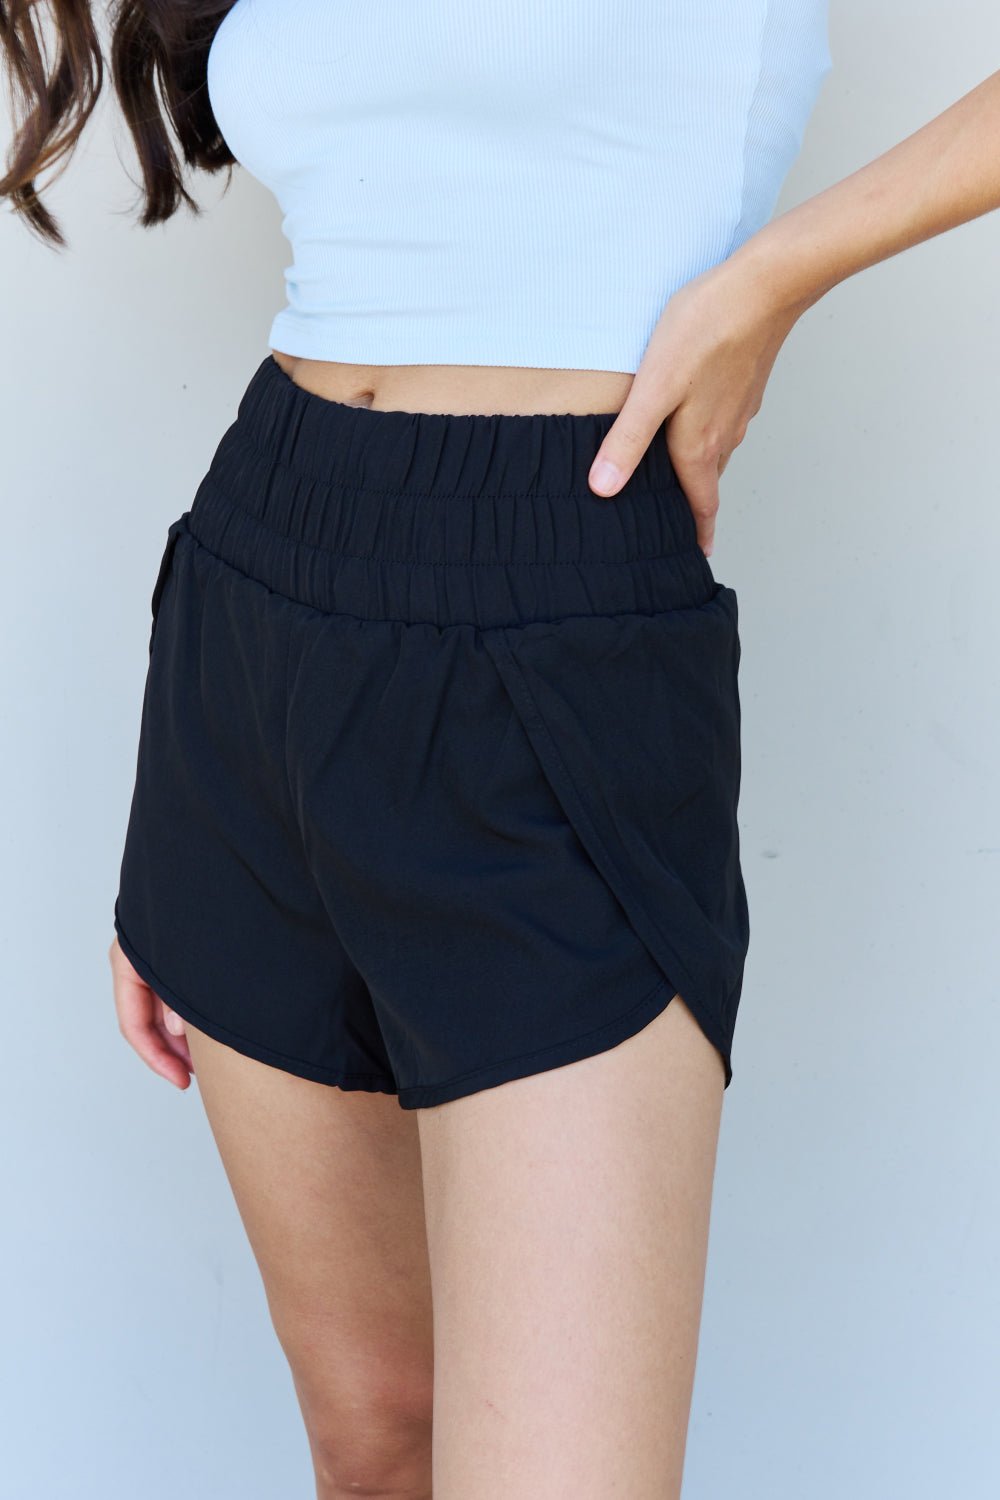 Ninexis Stay Active High Waistband Active Shorts in Black - pvmark